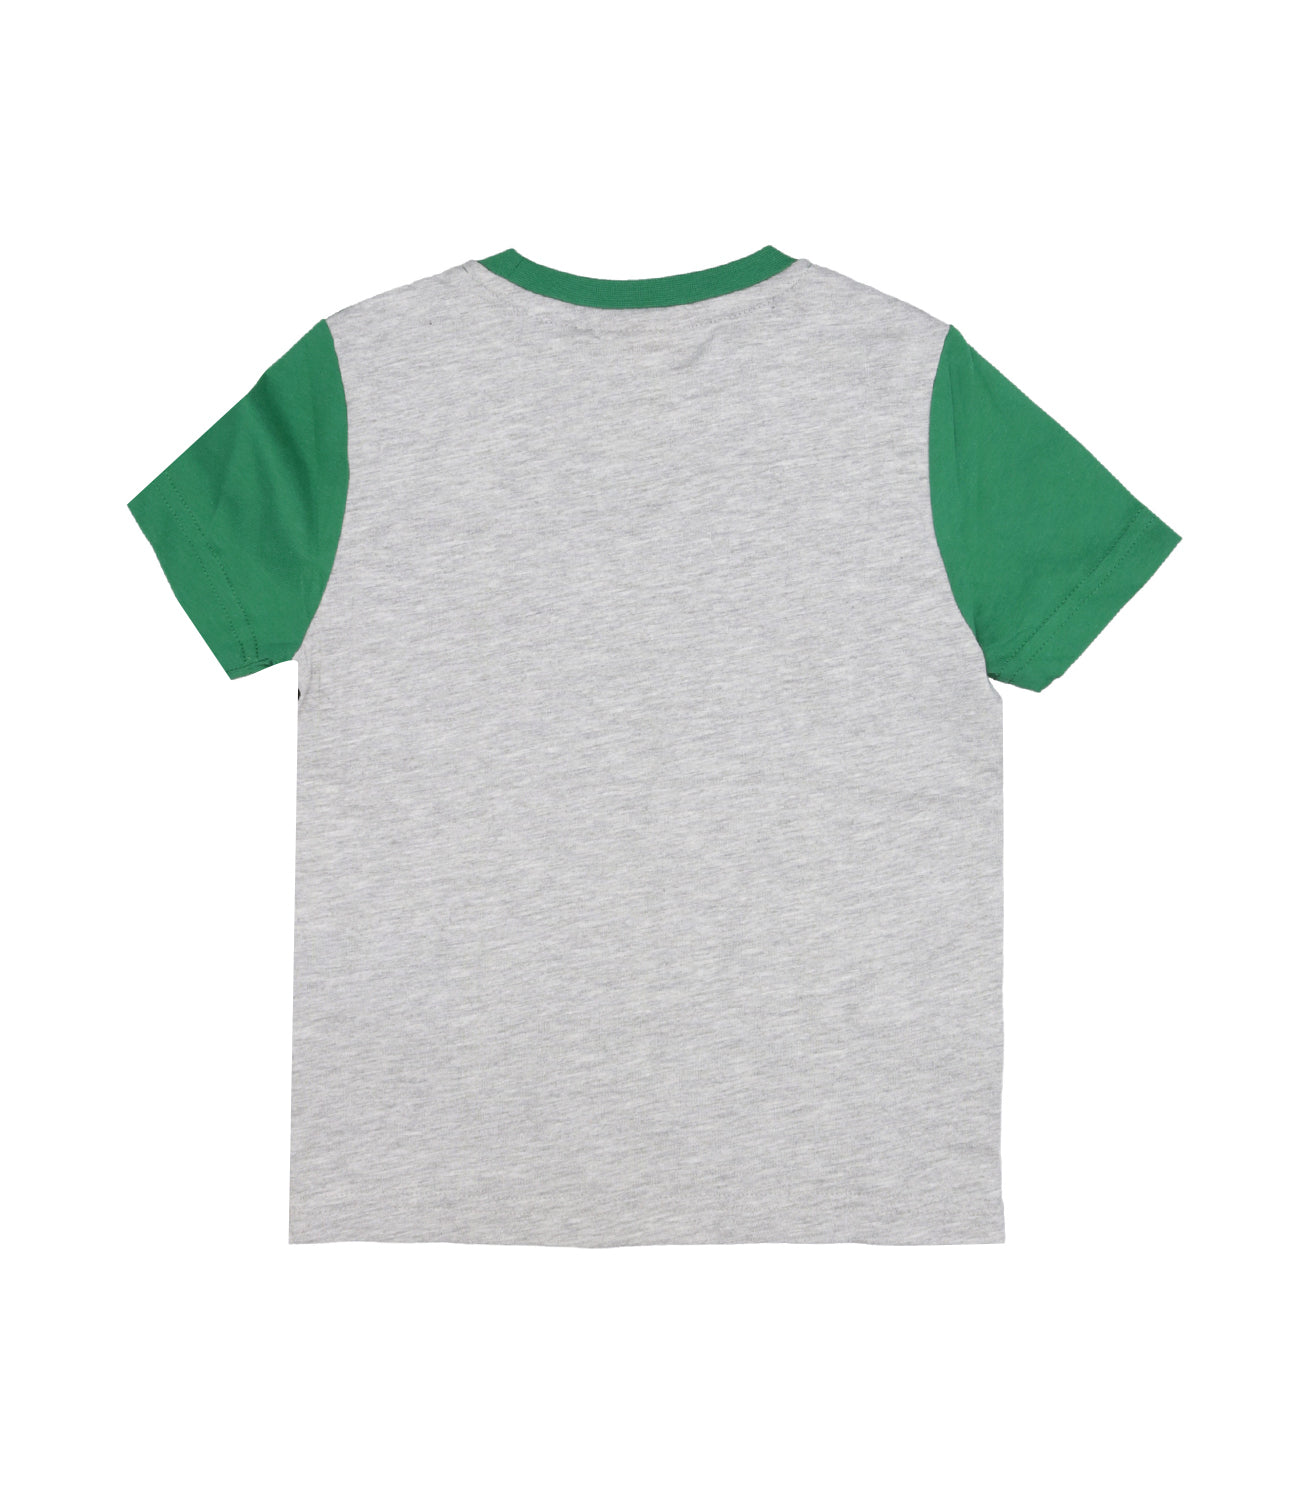 Fila Kids | T-Shirt Balimo Grigio Verde e Nero